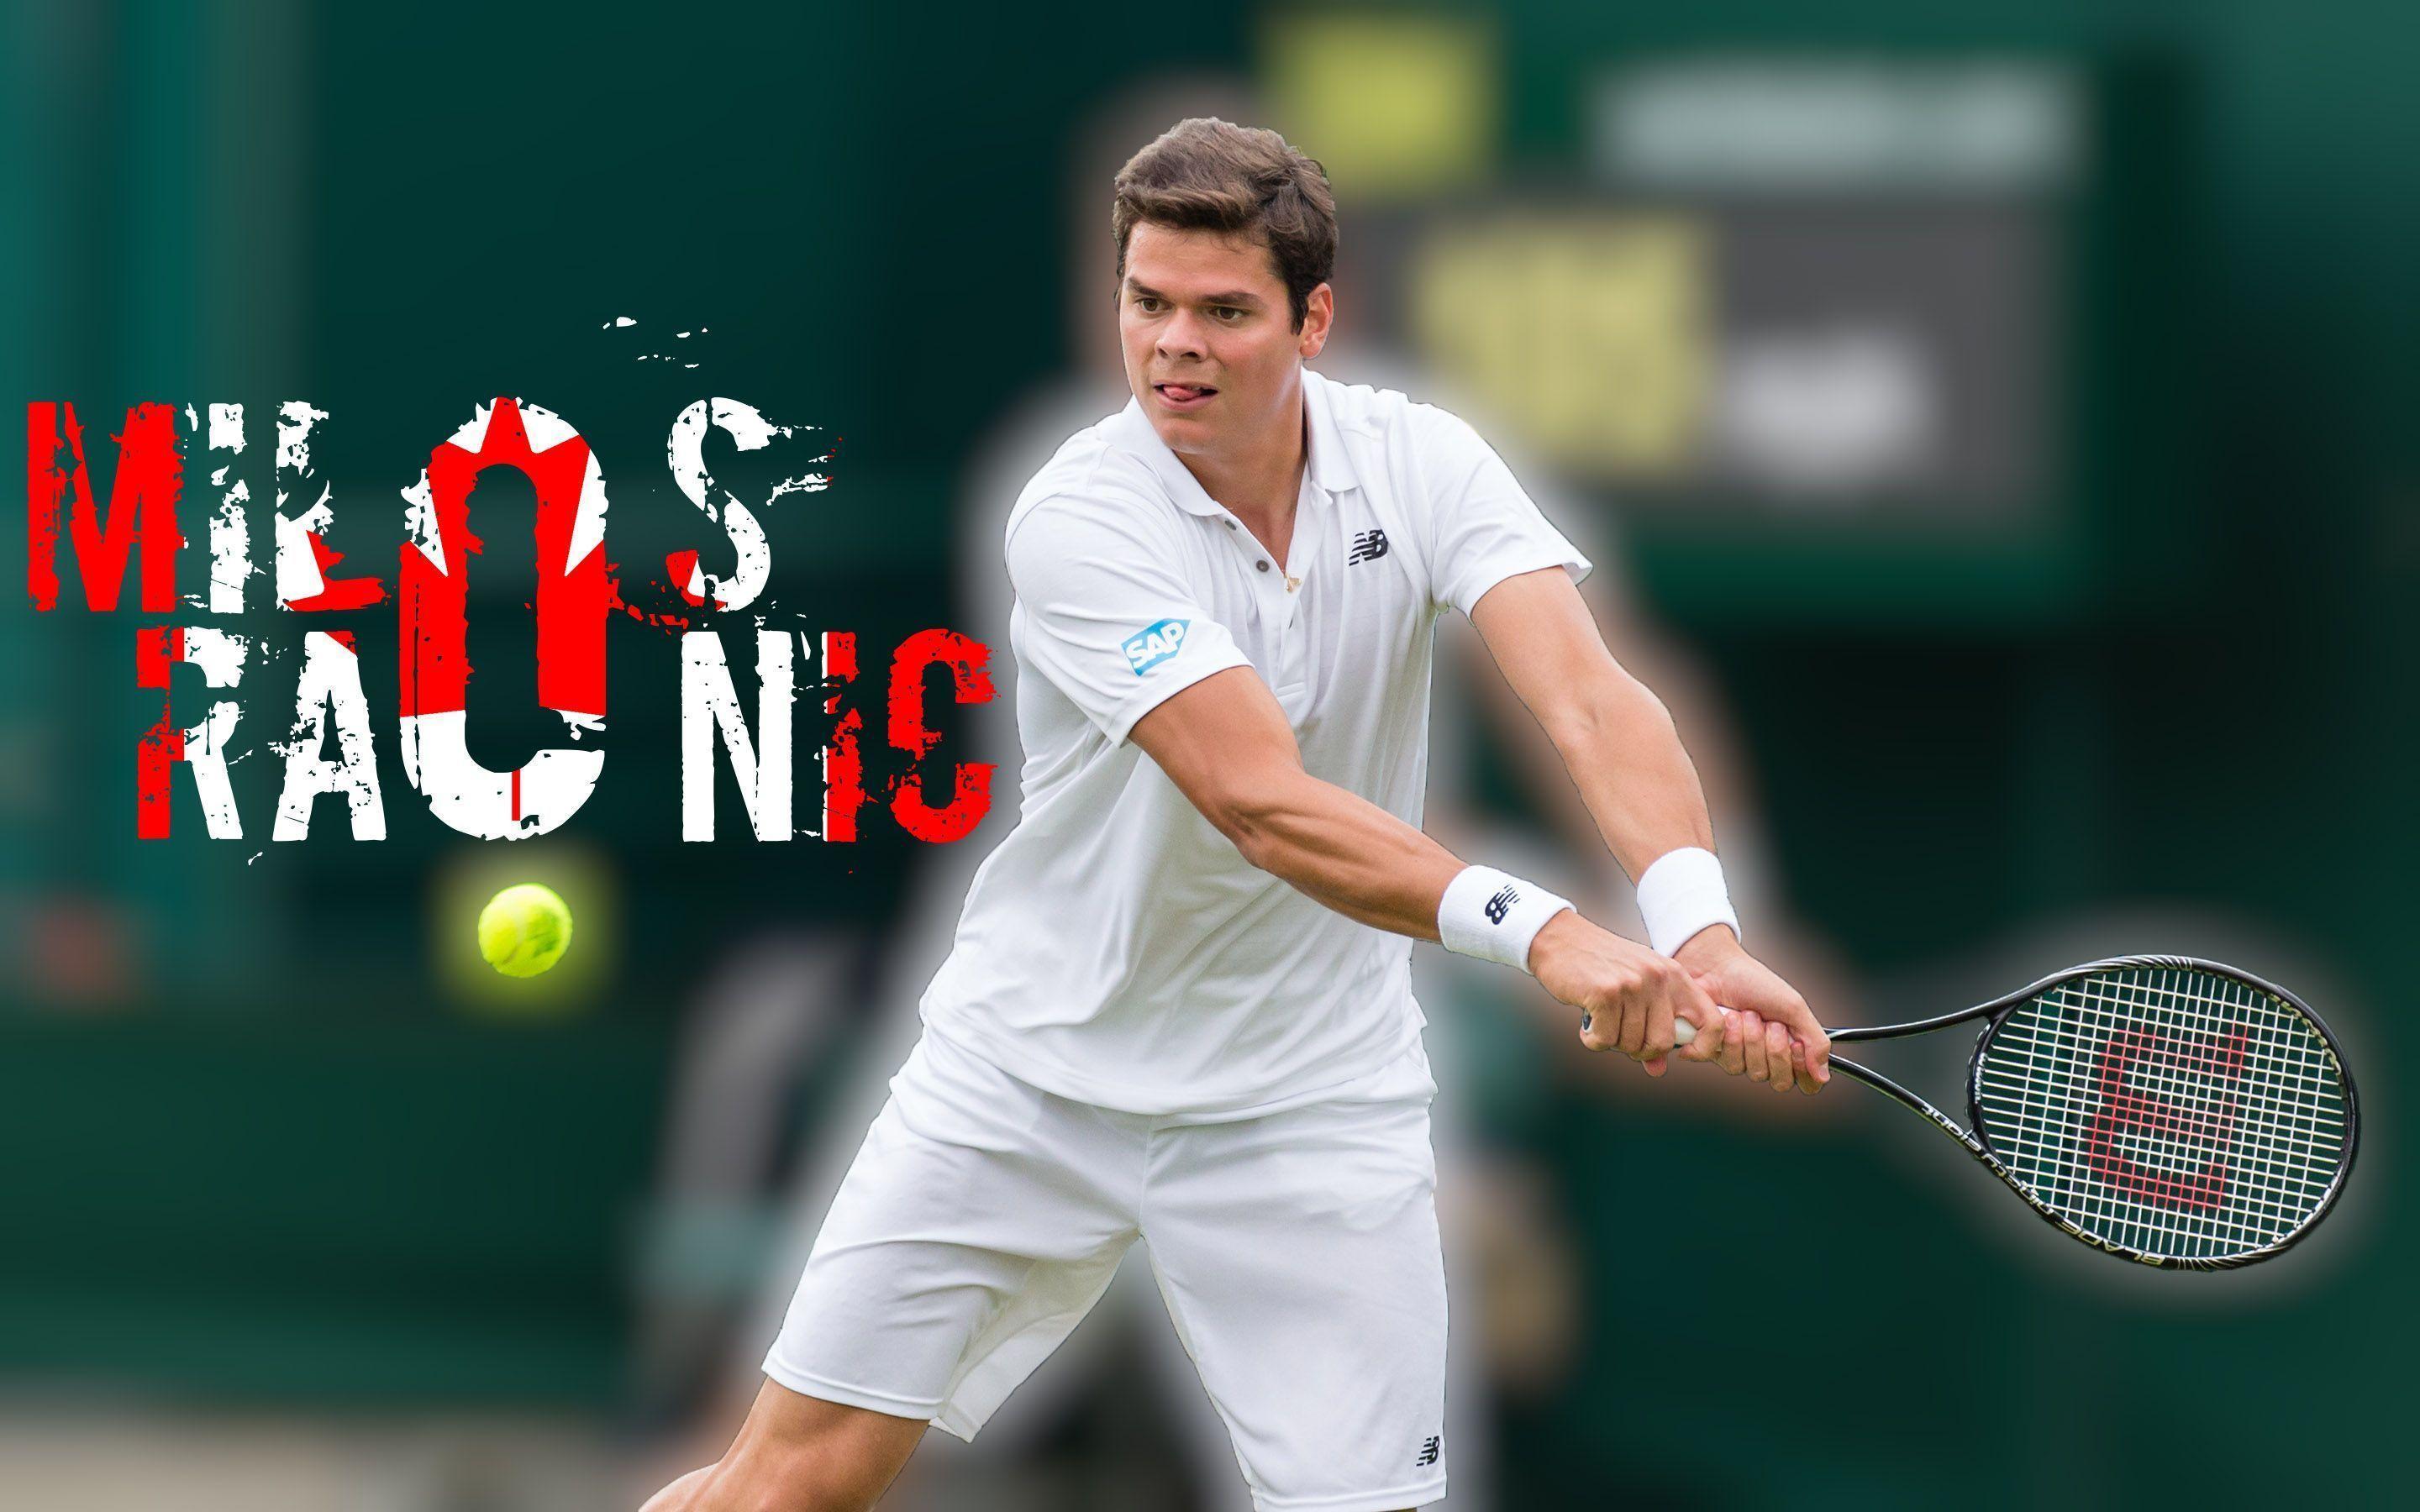 Milos Raonic 2014 Wimbledon Wallpaper Wide or HD. Male